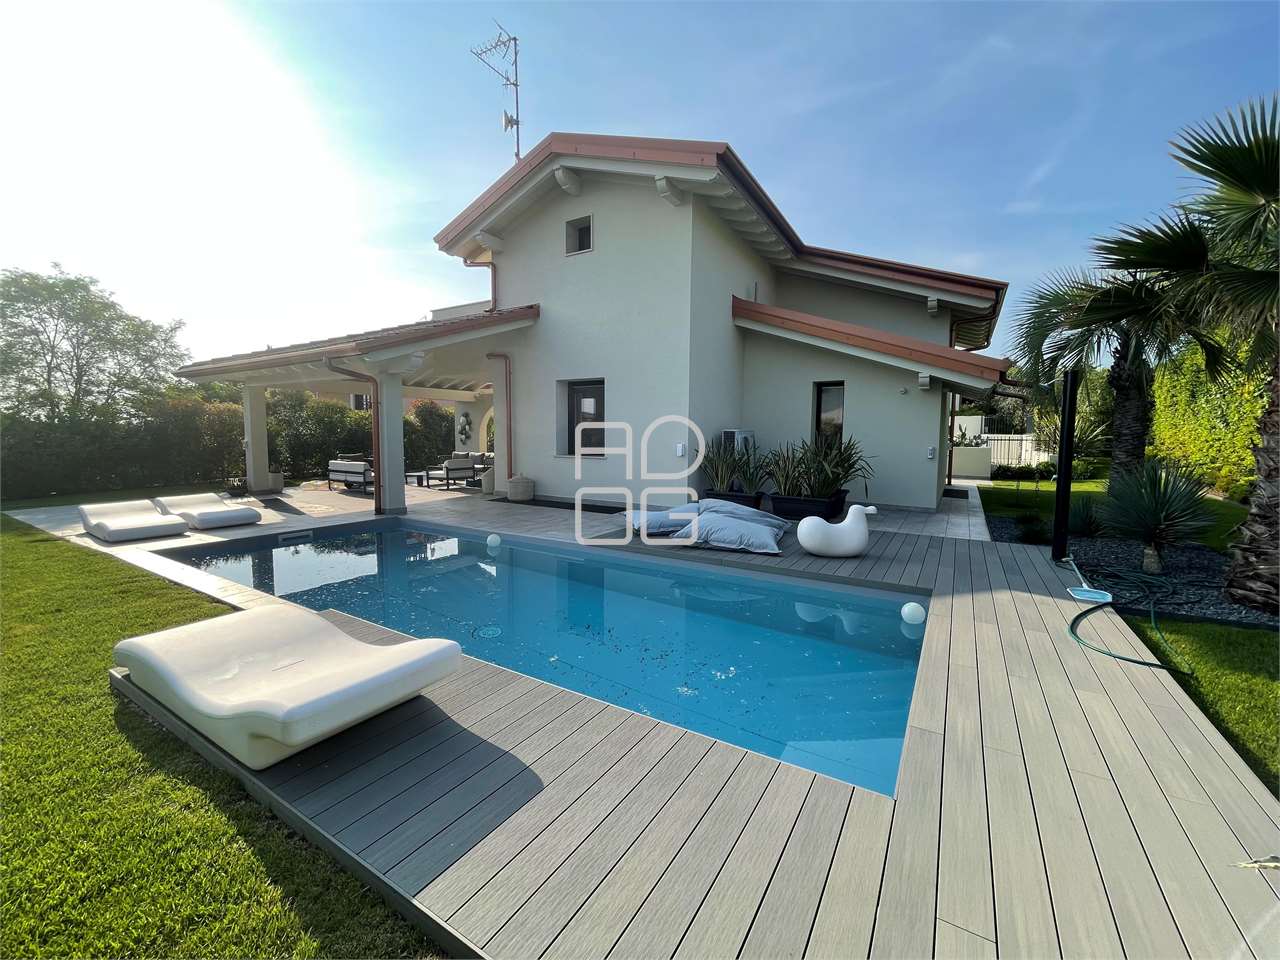 Elegante freistehende Villa mit privatem Pool in Lonato del Garda